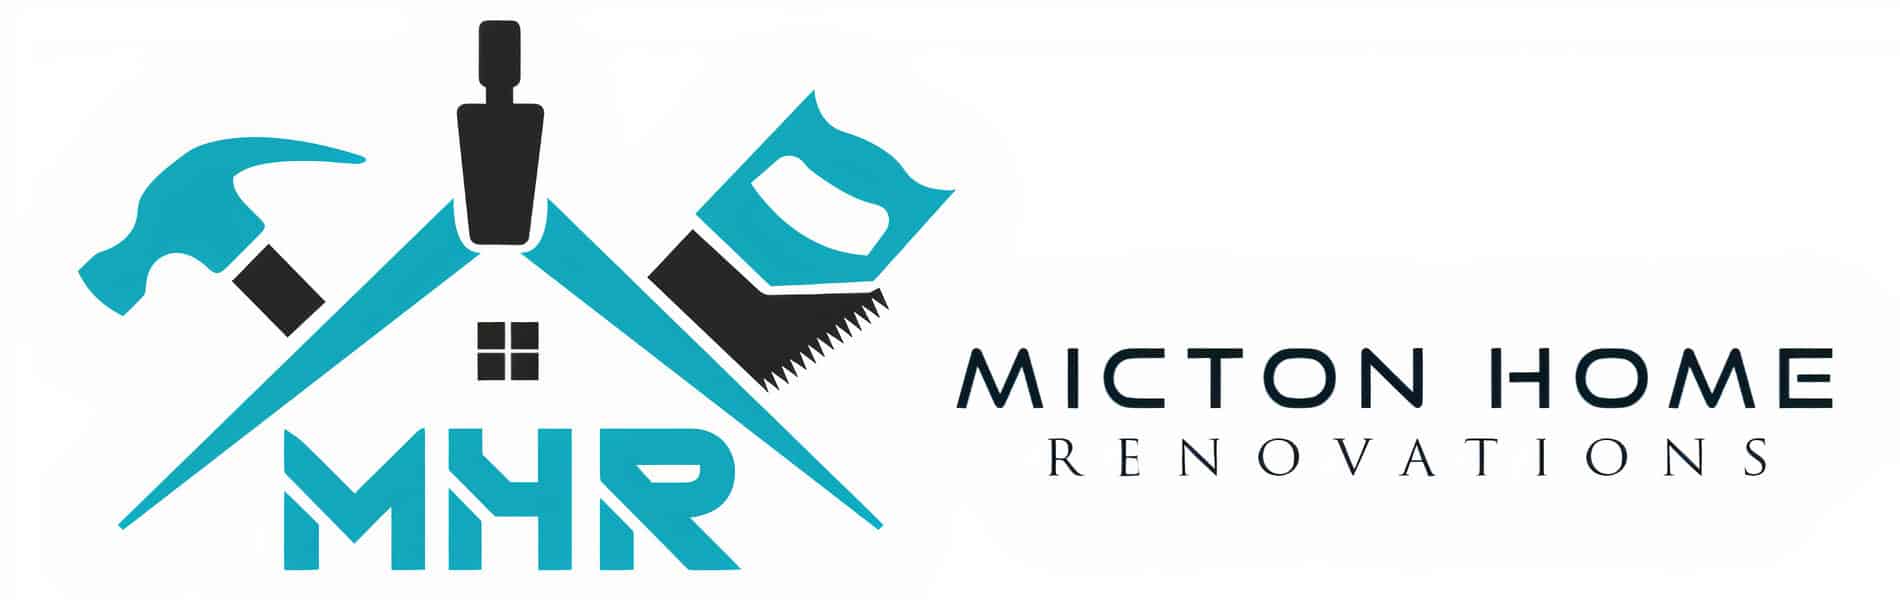 Milton home renovations logo with menu.